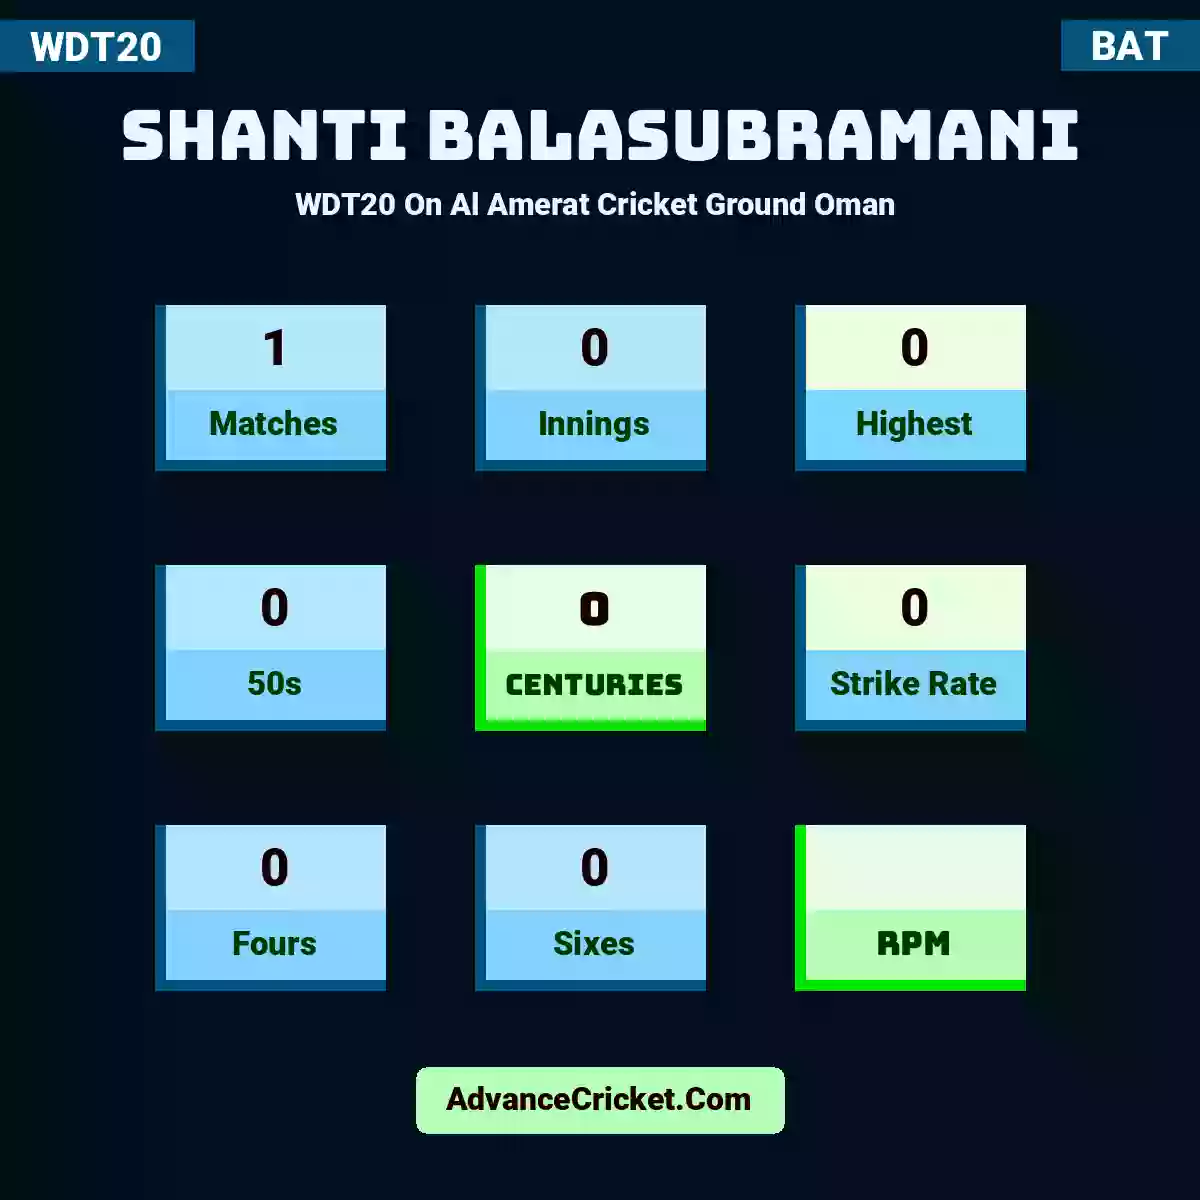 Shanti Balasubramani WDT20  On Al Amerat Cricket Ground Oman , Shanti Balasubramani played 1 matches, scored 0 runs as highest, 0 half-centuries, and 0 centuries, with a strike rate of 0. S.Balasubramani hit 0 fours and 0 sixes.